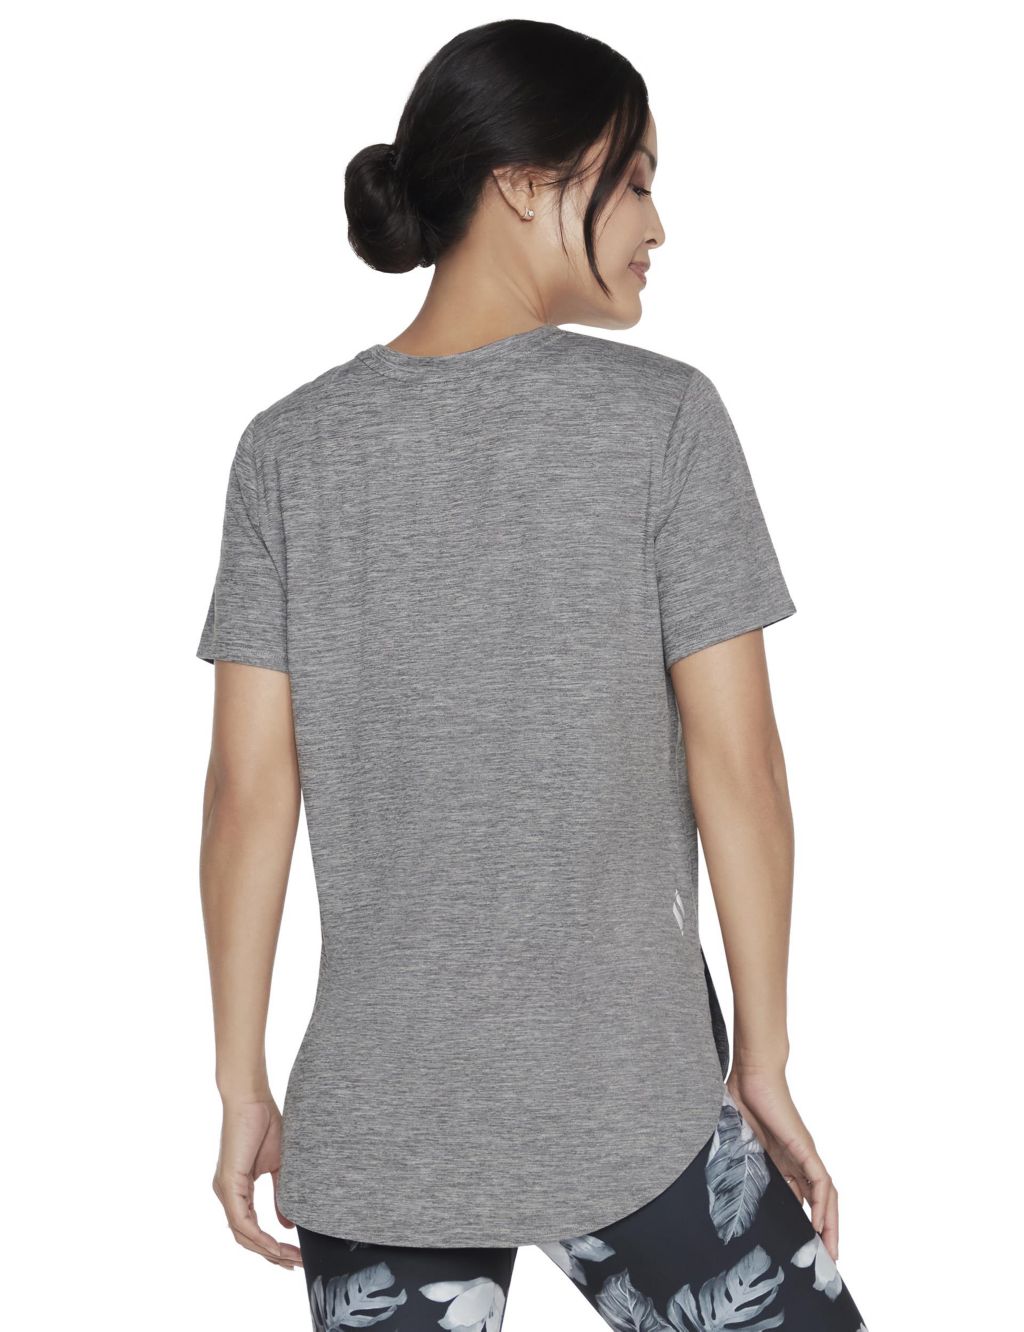 Godri Swift T-Shirt image 2